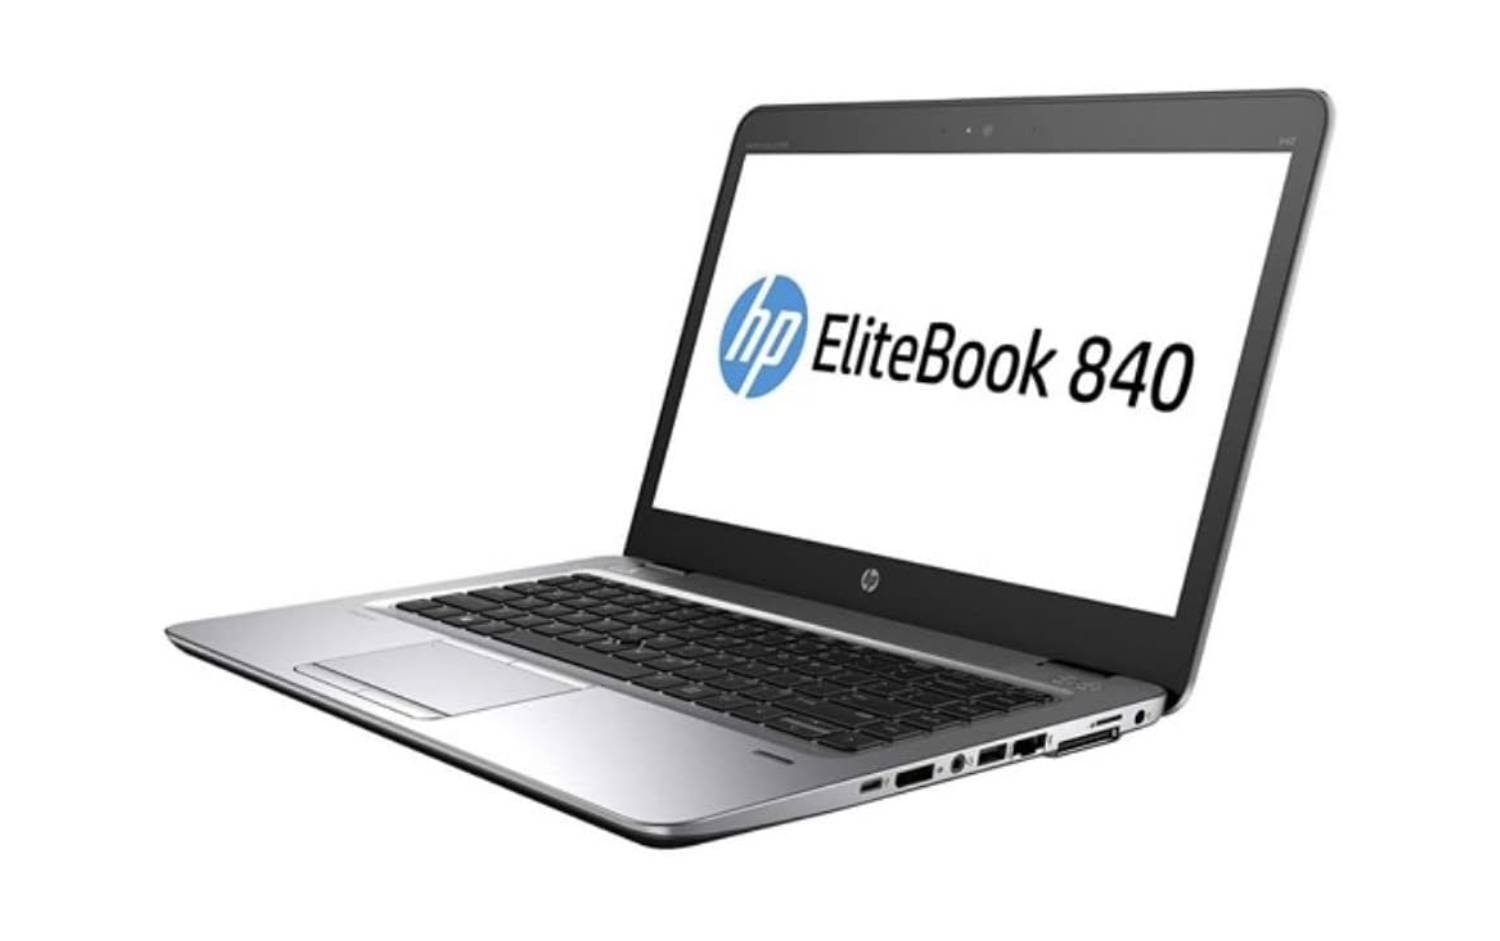 HP EliteBook 840 G3 Intel Core i5 6th Gen 8GB RAM 256GB SSD Microsoft Windows 10 Pro